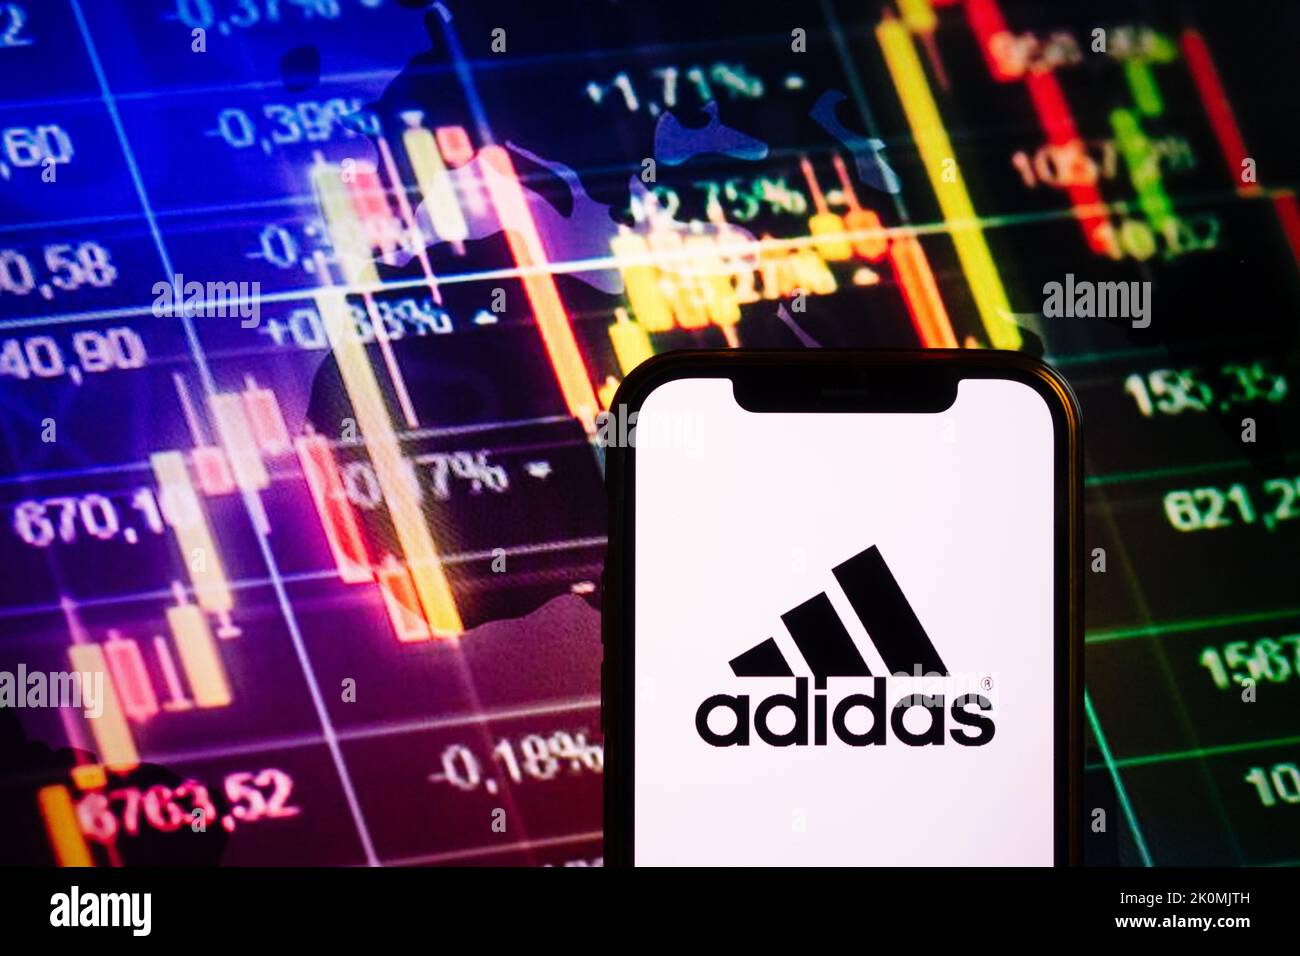 KONSKIE, POLAND - September 10, 2022: Smartphone displaying logo of Adidas company on stock exchange diagram background Stock Photo